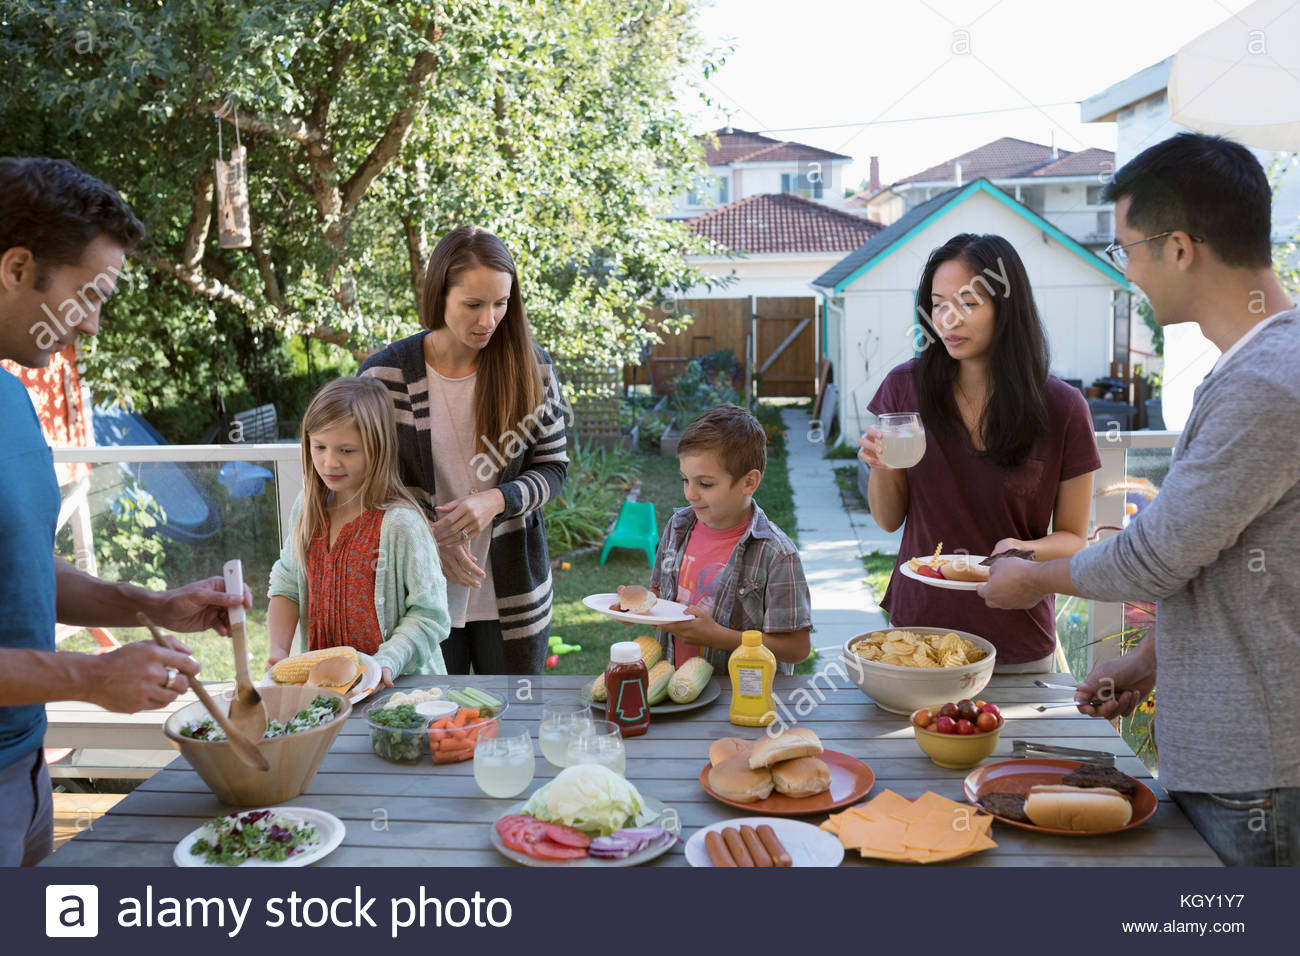 Neighbor families enjoying barbecue on patio Stock Photo